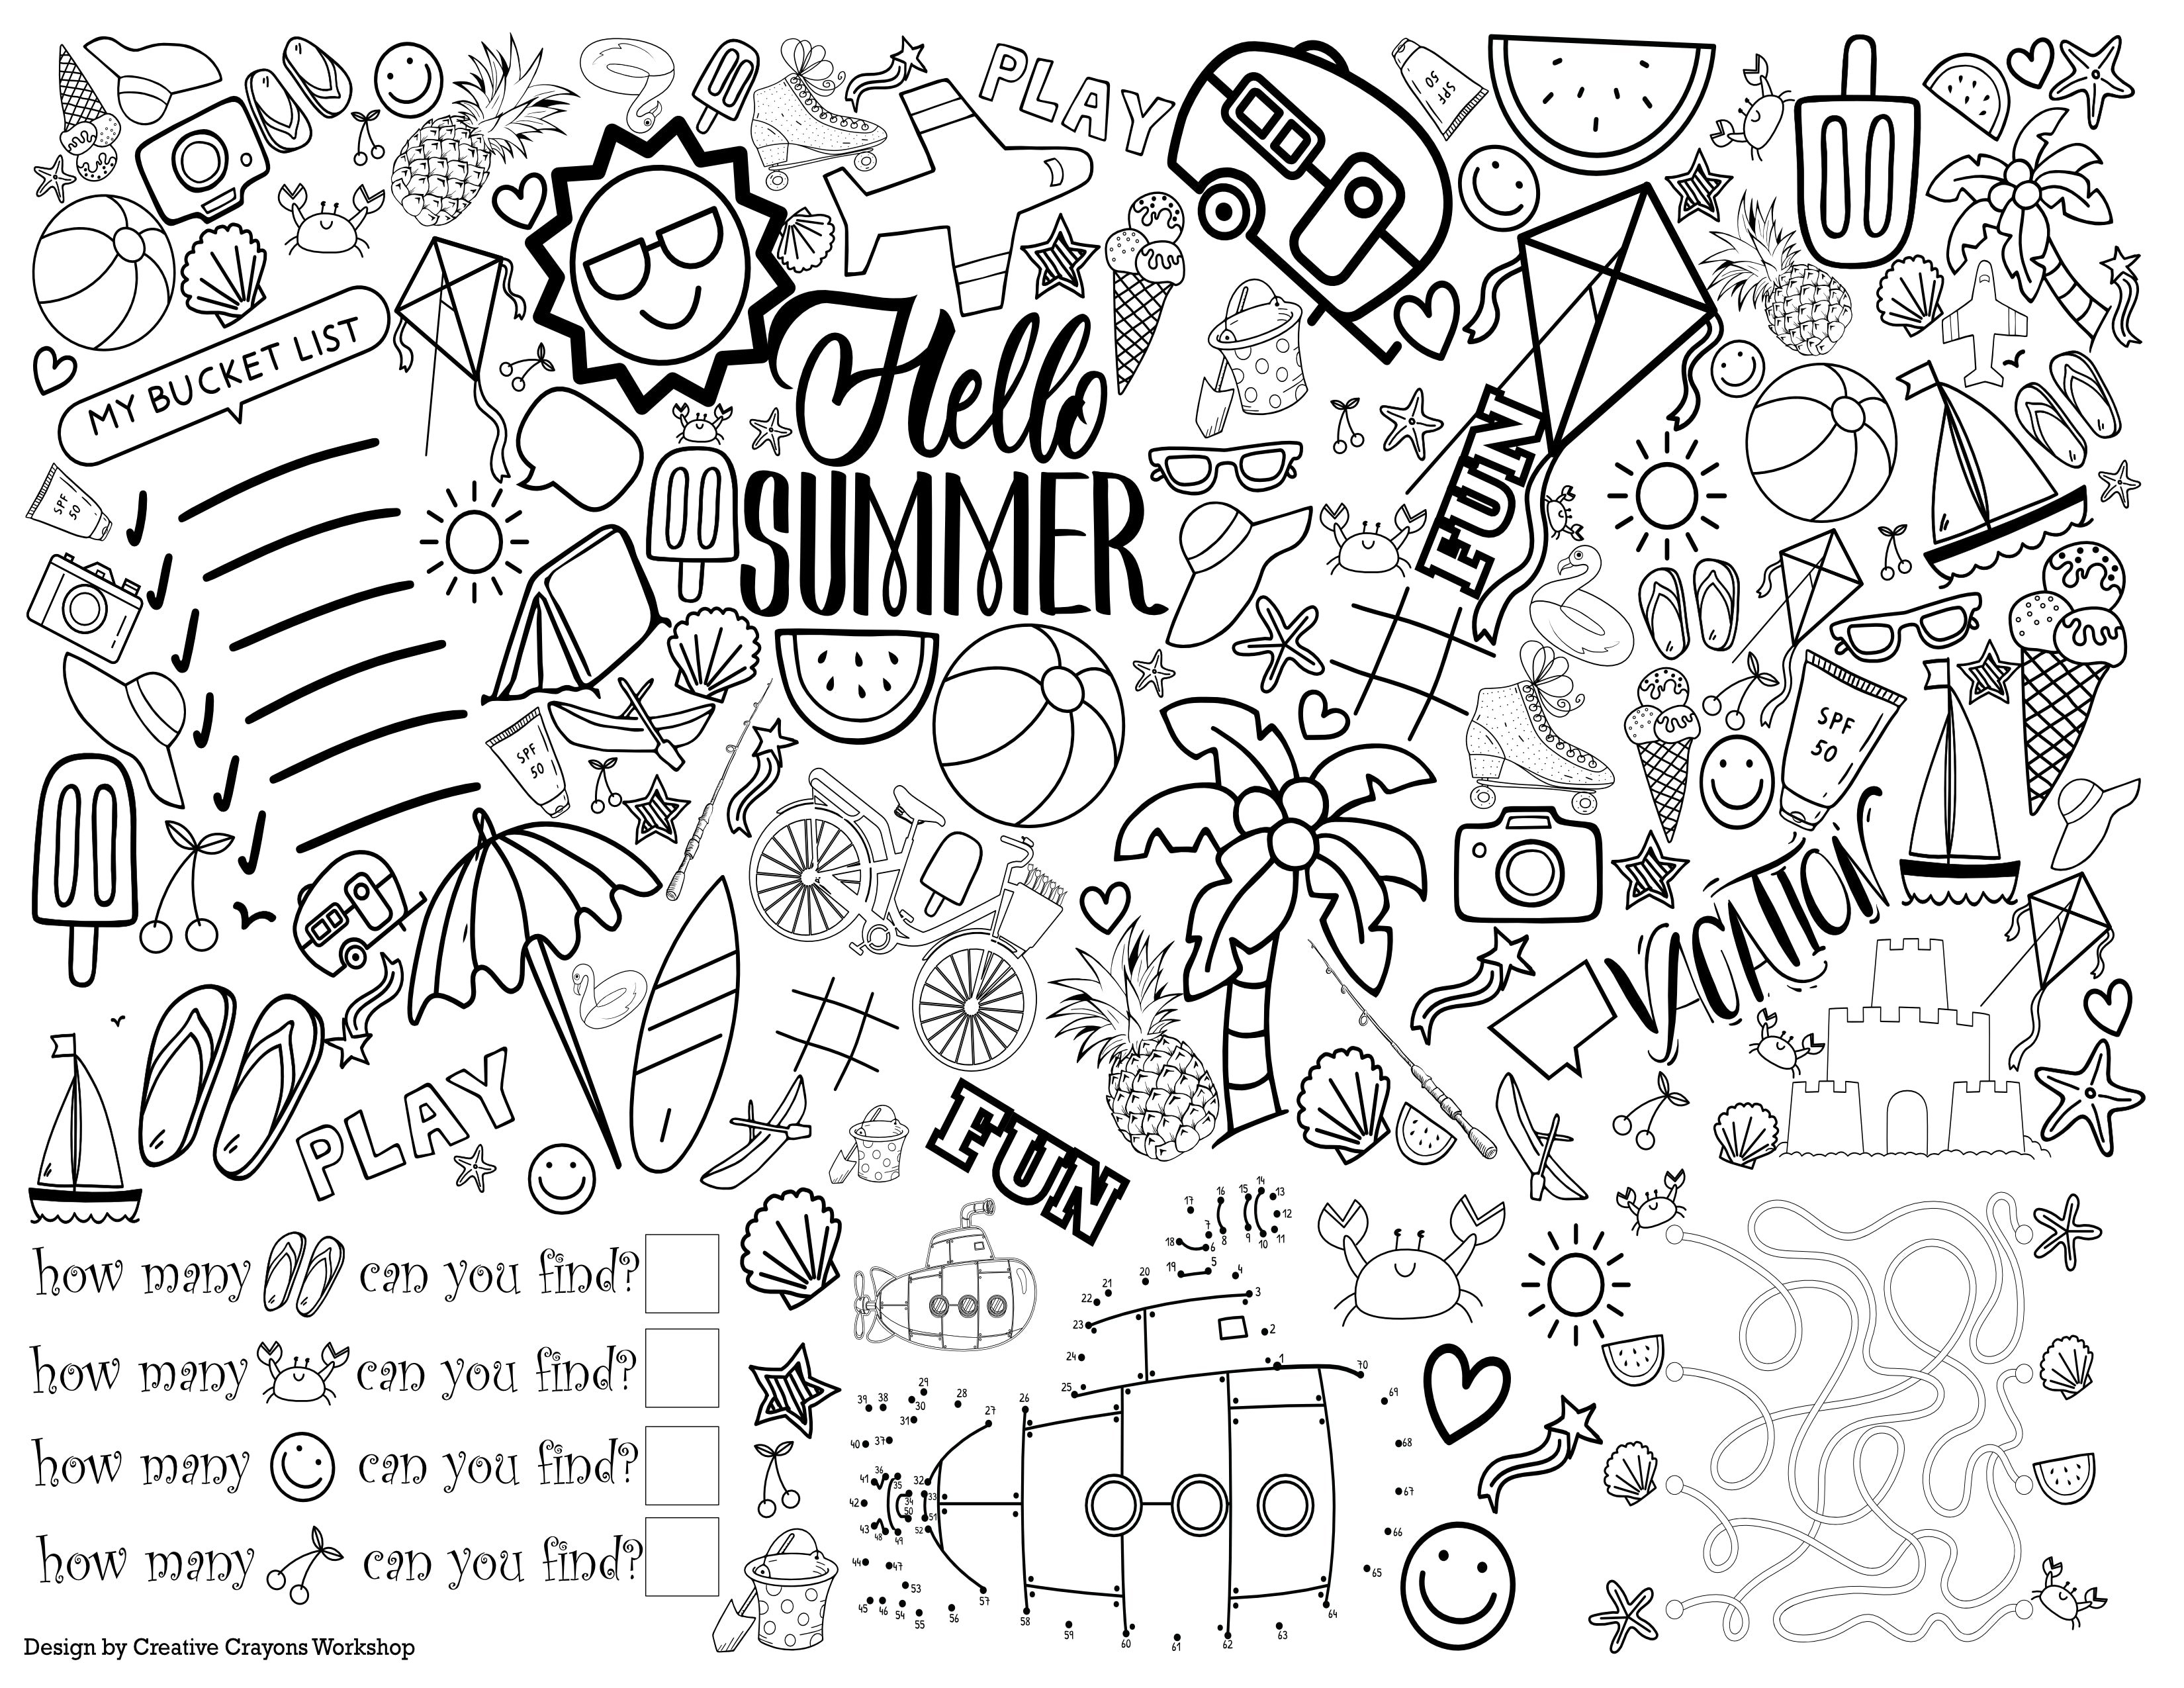 Summer fun coloring page â creative crayons workshop